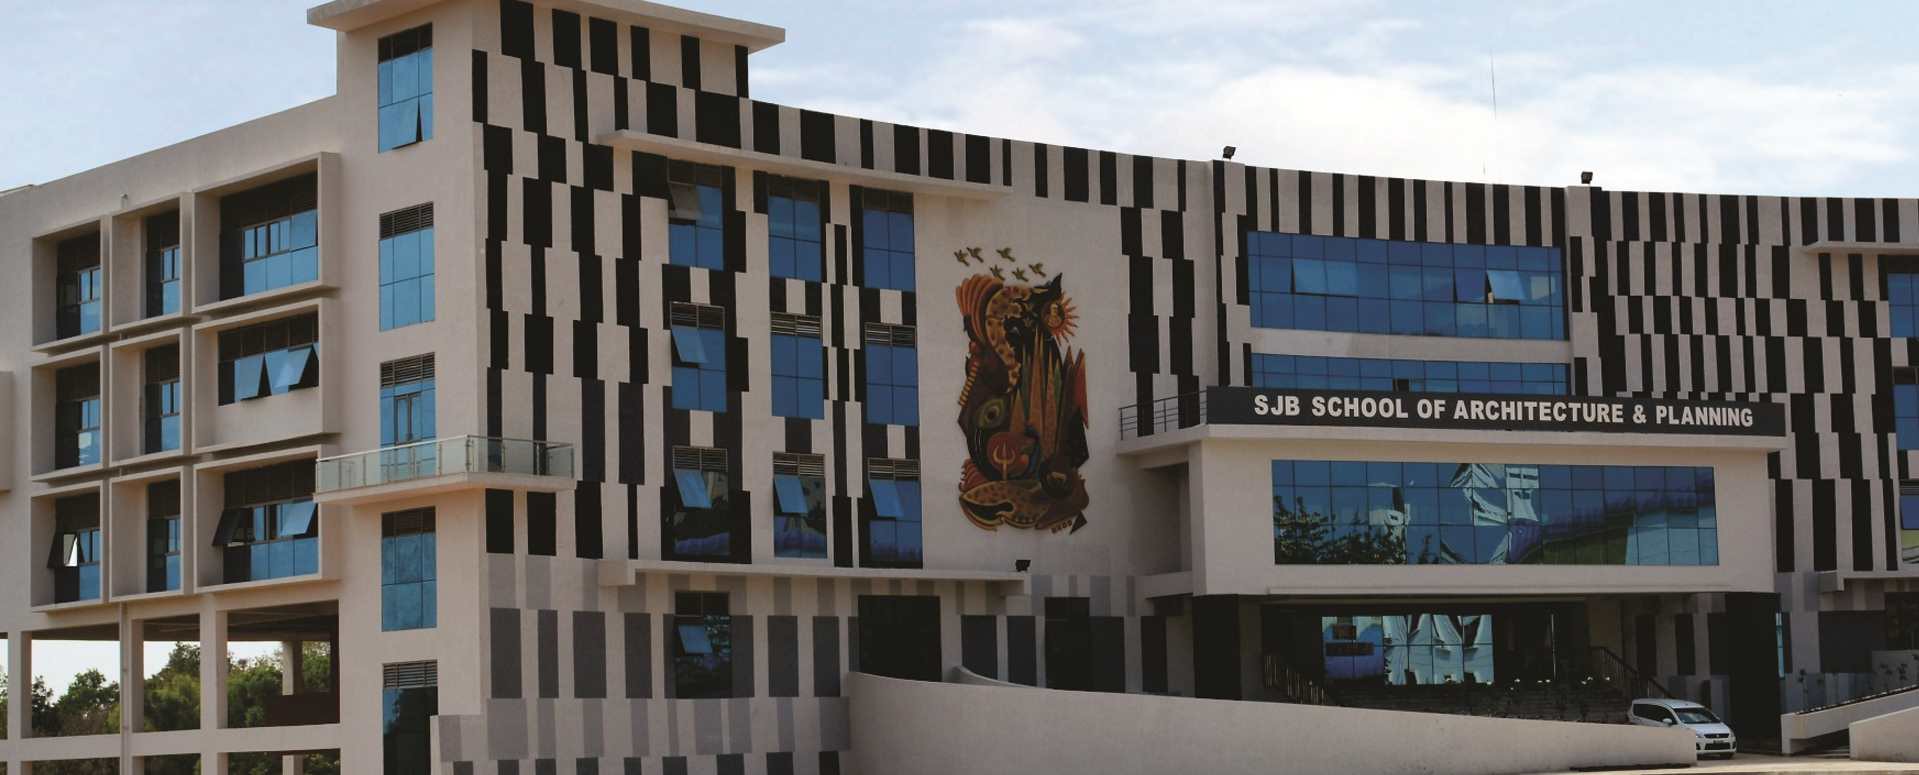 SJB School of Architecture and Planning, Bengaluru Image